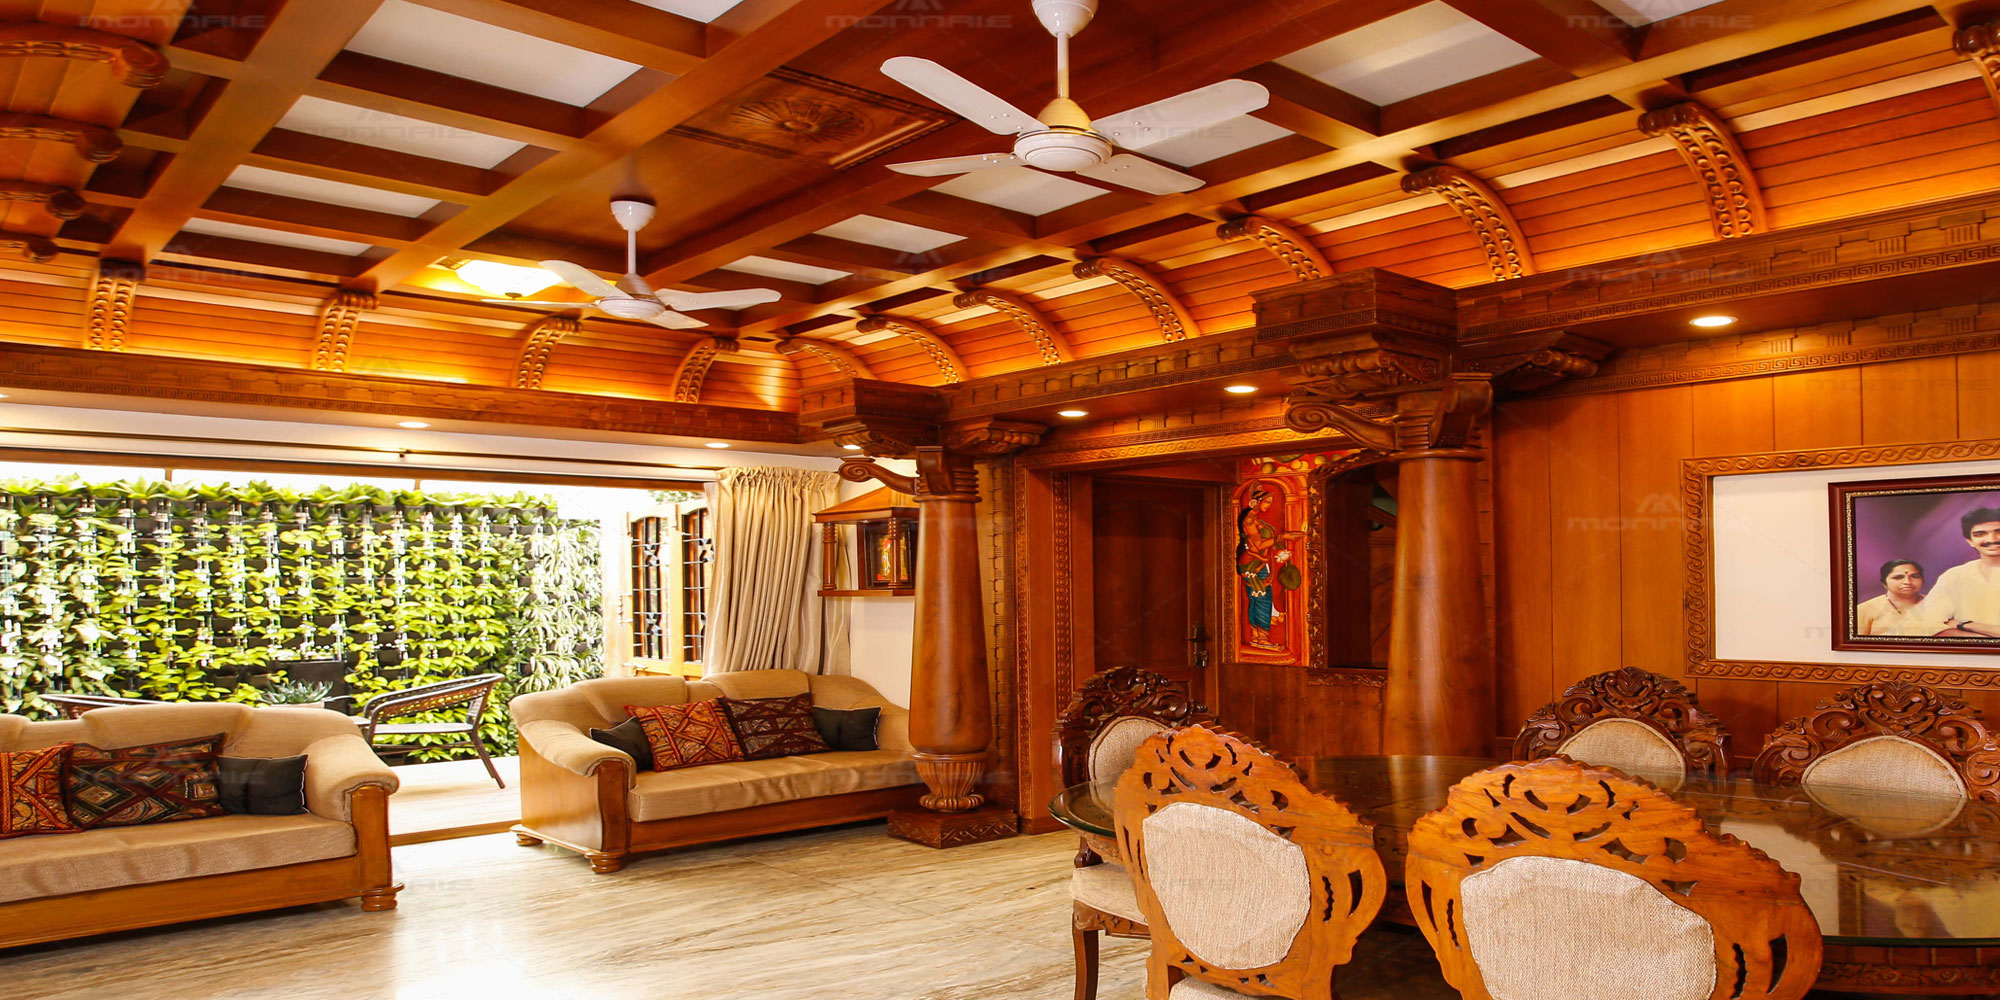 Kerala style home interior design ideas pictures - Windows ...